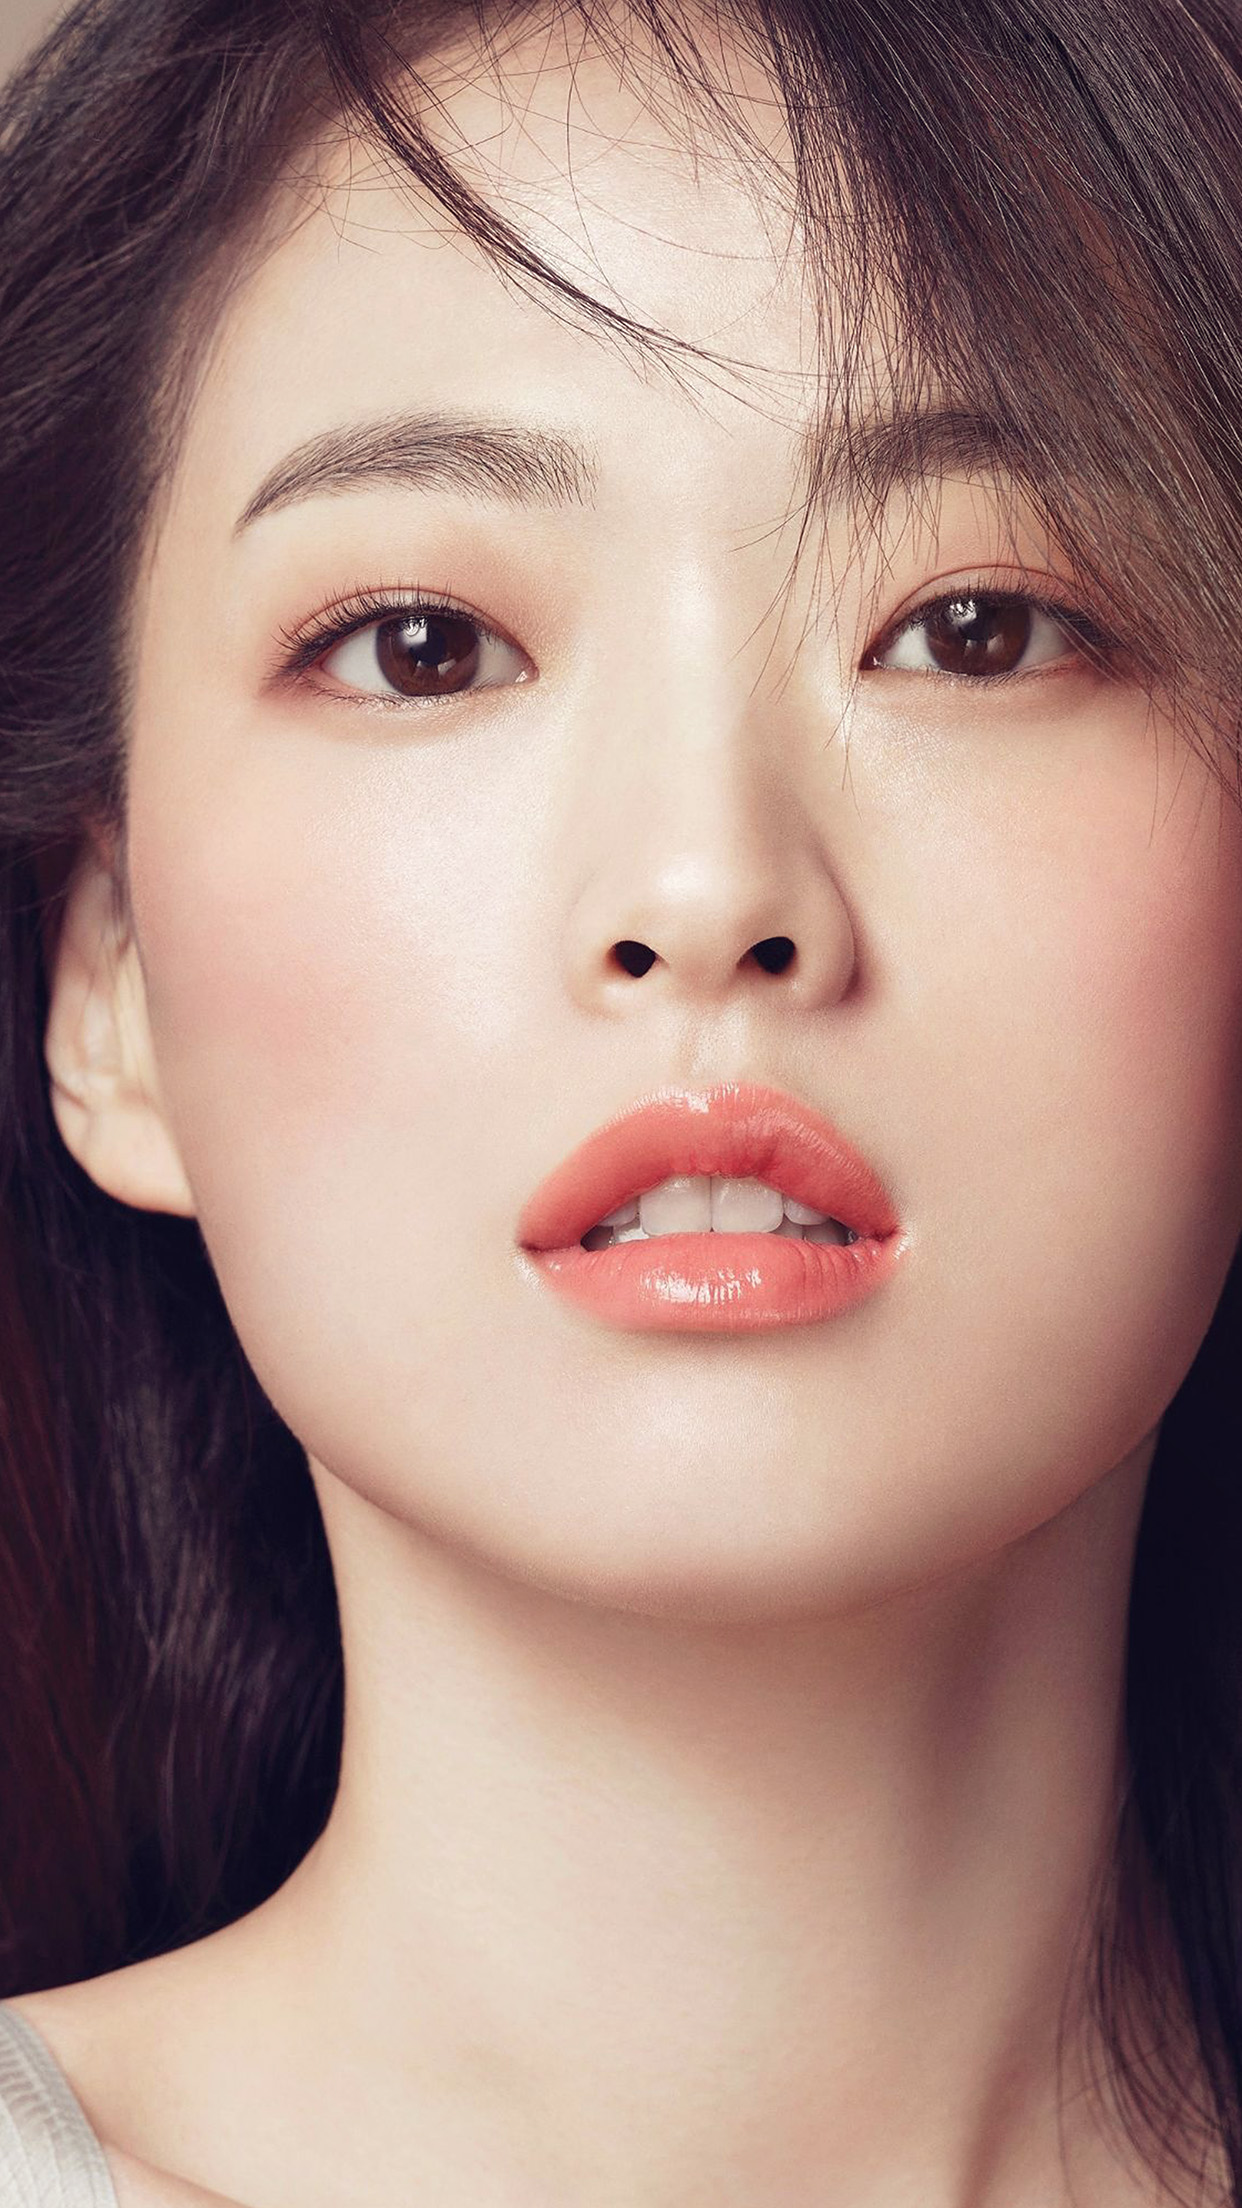 Girl Kpop Lips Cute Beauty Android wallpaper